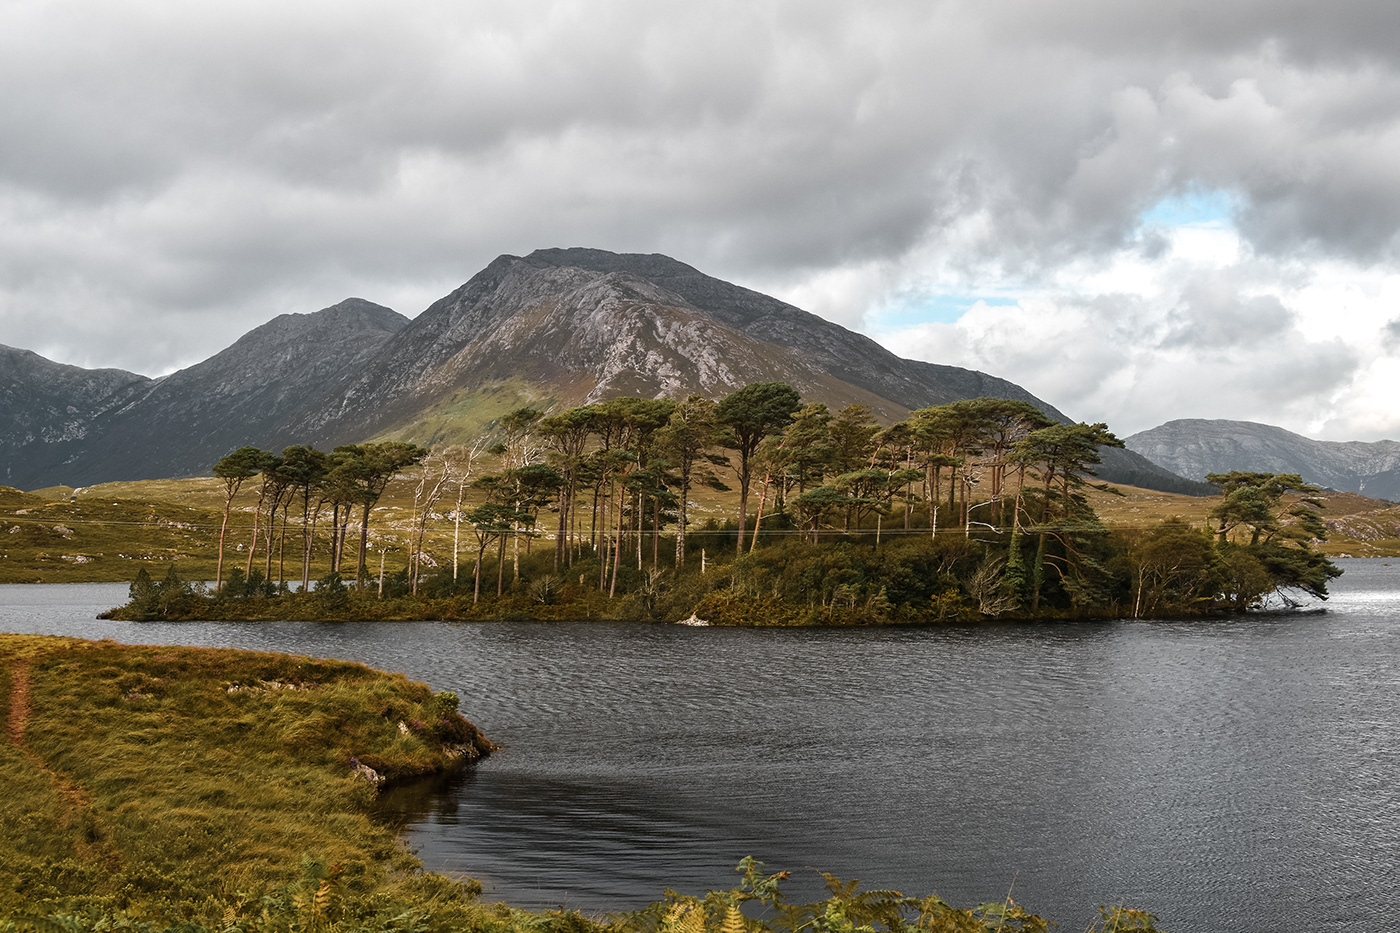 Outdoor adventure Backpacking Travel Nikon DJI inspire Ireland iceland Connemara